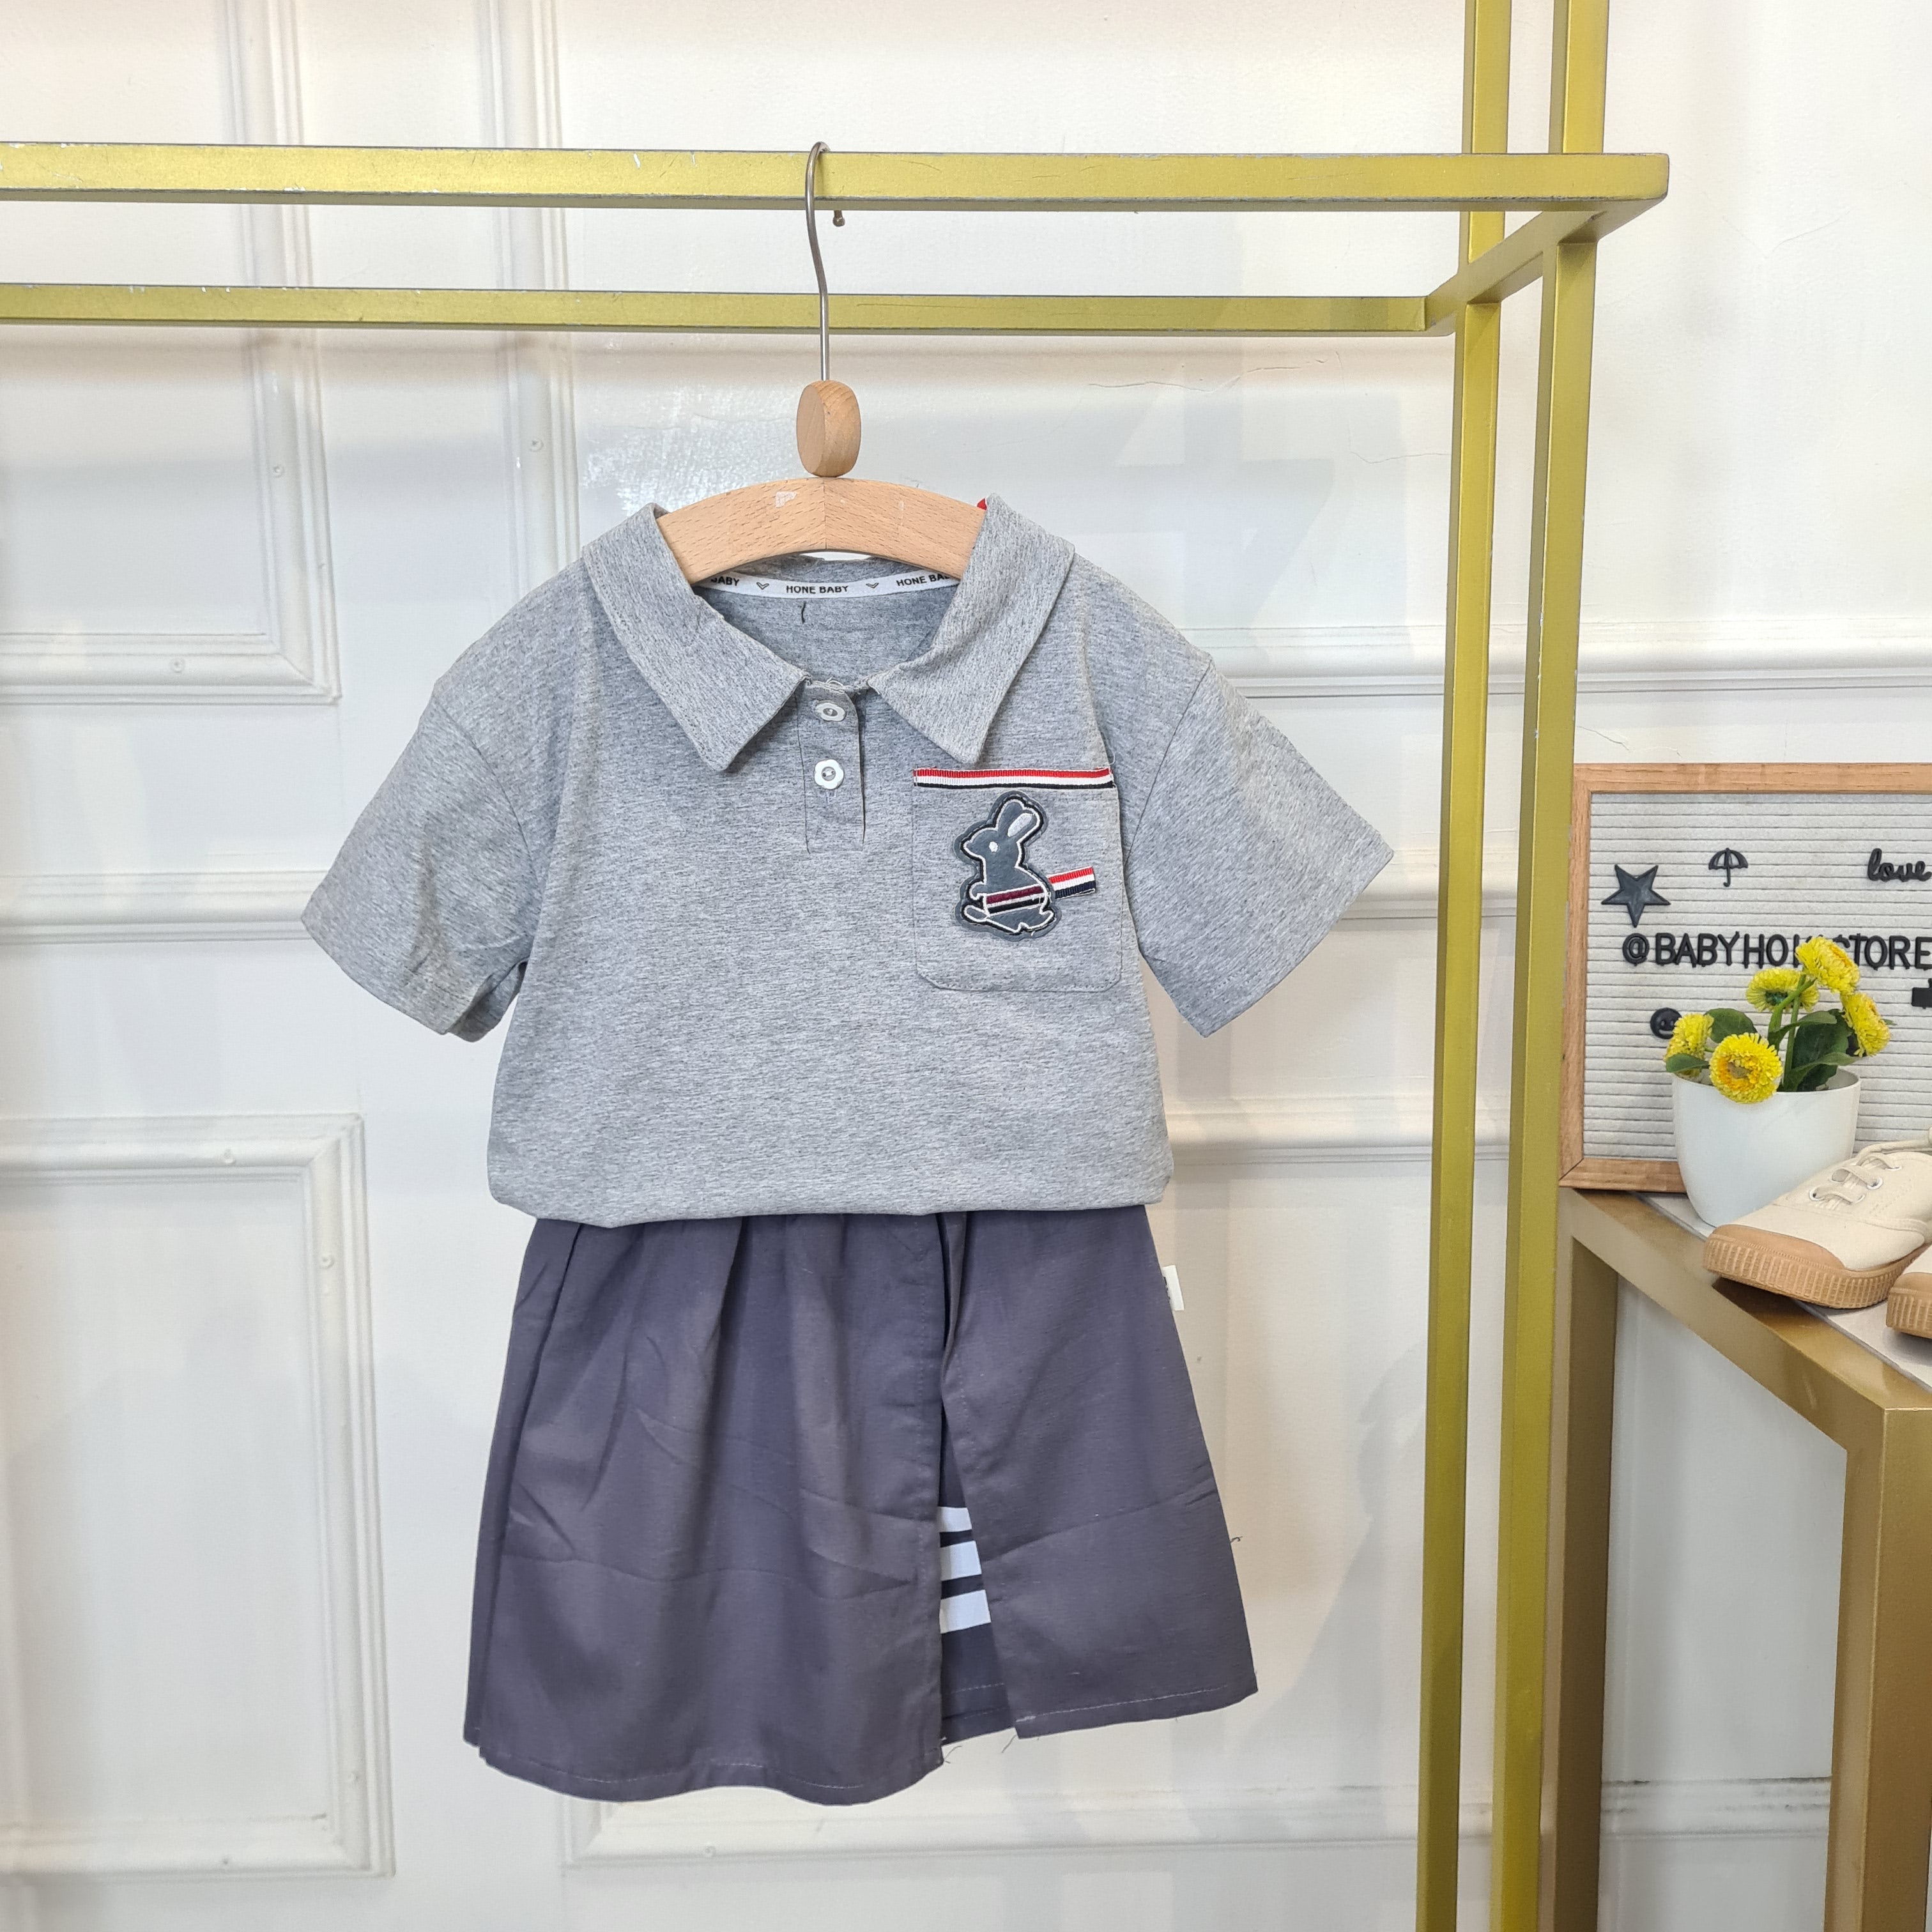 [345477-V1] - Baju Setelan Kaos Kerah Polo Fashion Import Anak Perempuan - Motif Bunny Lines